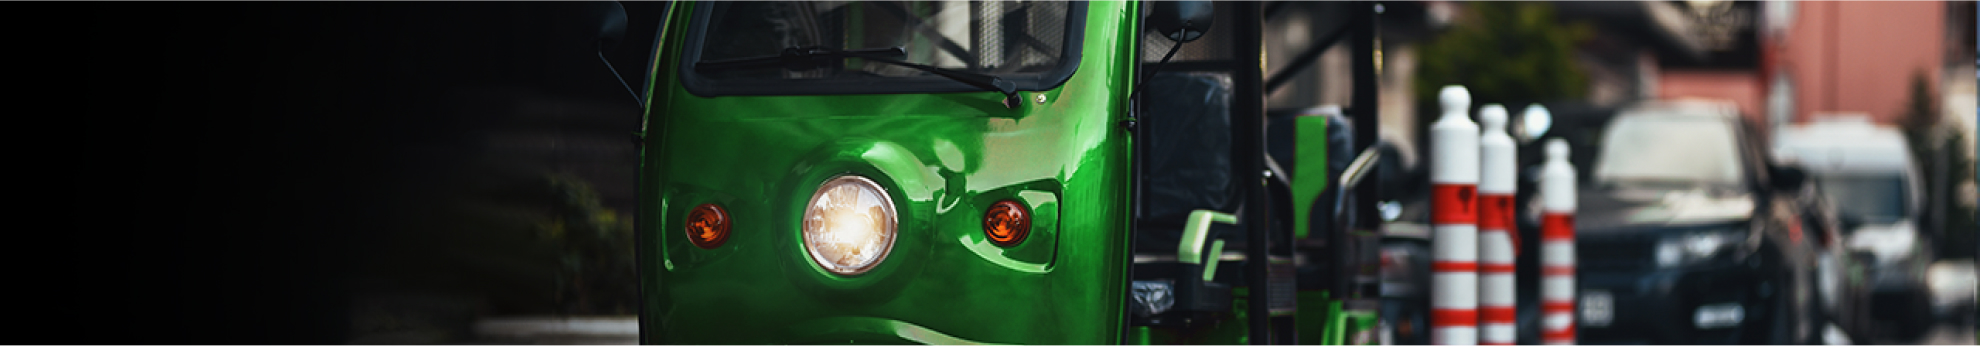 Okaya Power: E-rickshaw battery that empowers your journey experience